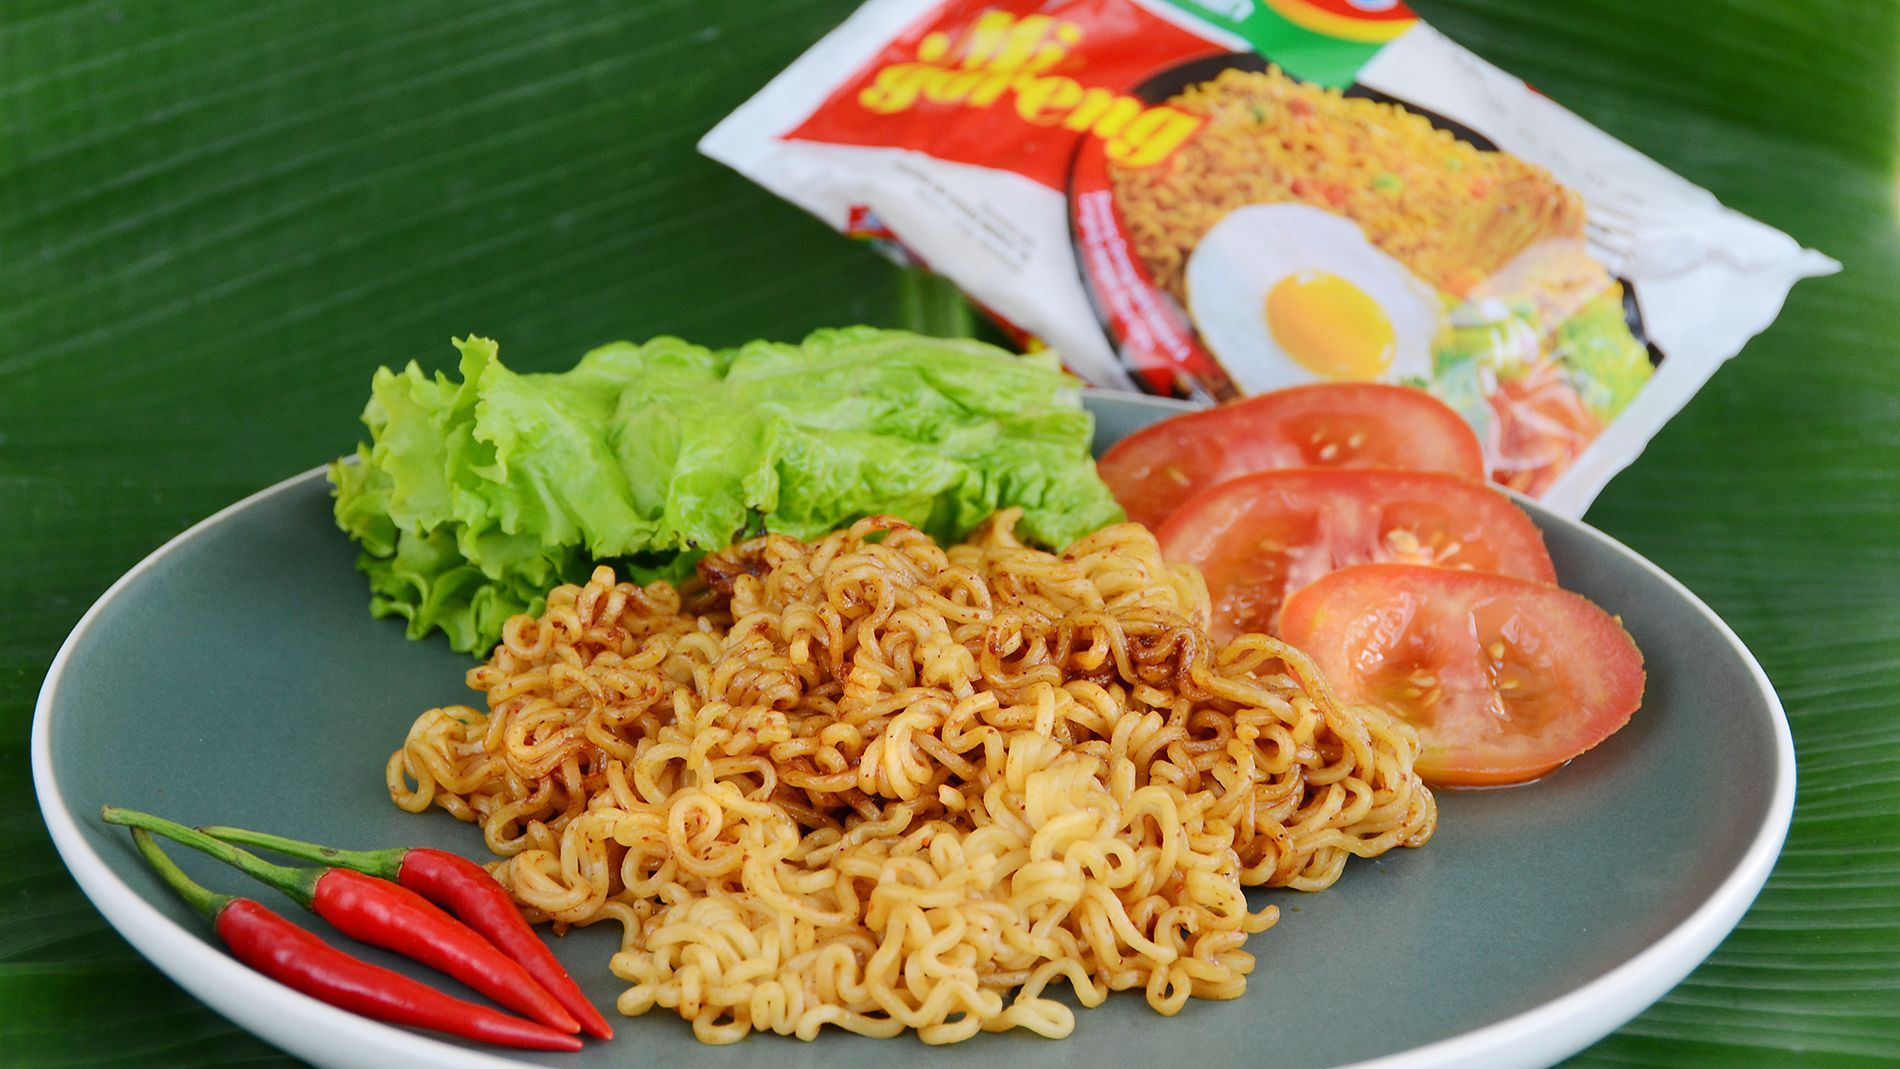 Indomie maker refutes food safety cancer scares around popular